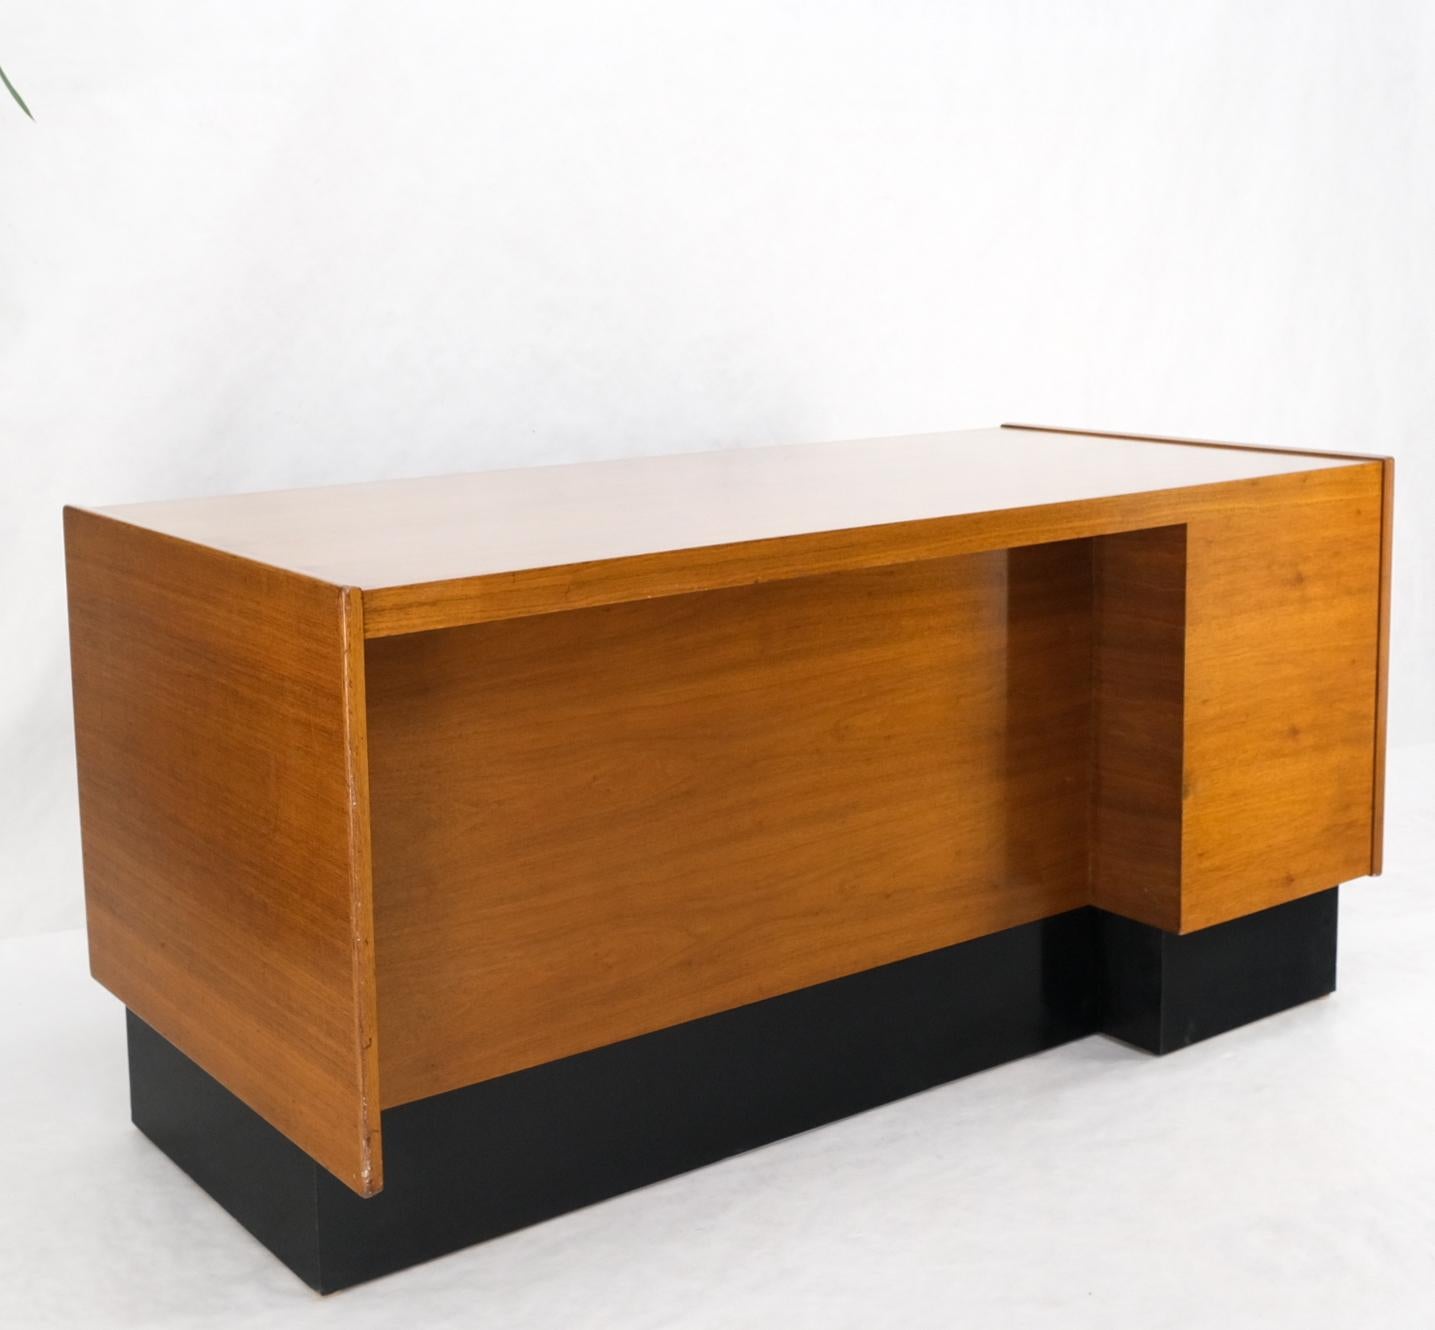 American walnut Ed Wormley for Dunbar double pedestal desk w/ folding return.
Uniquer folding return desk feature, nice architectural design back, beautiful amber honey tone finish.